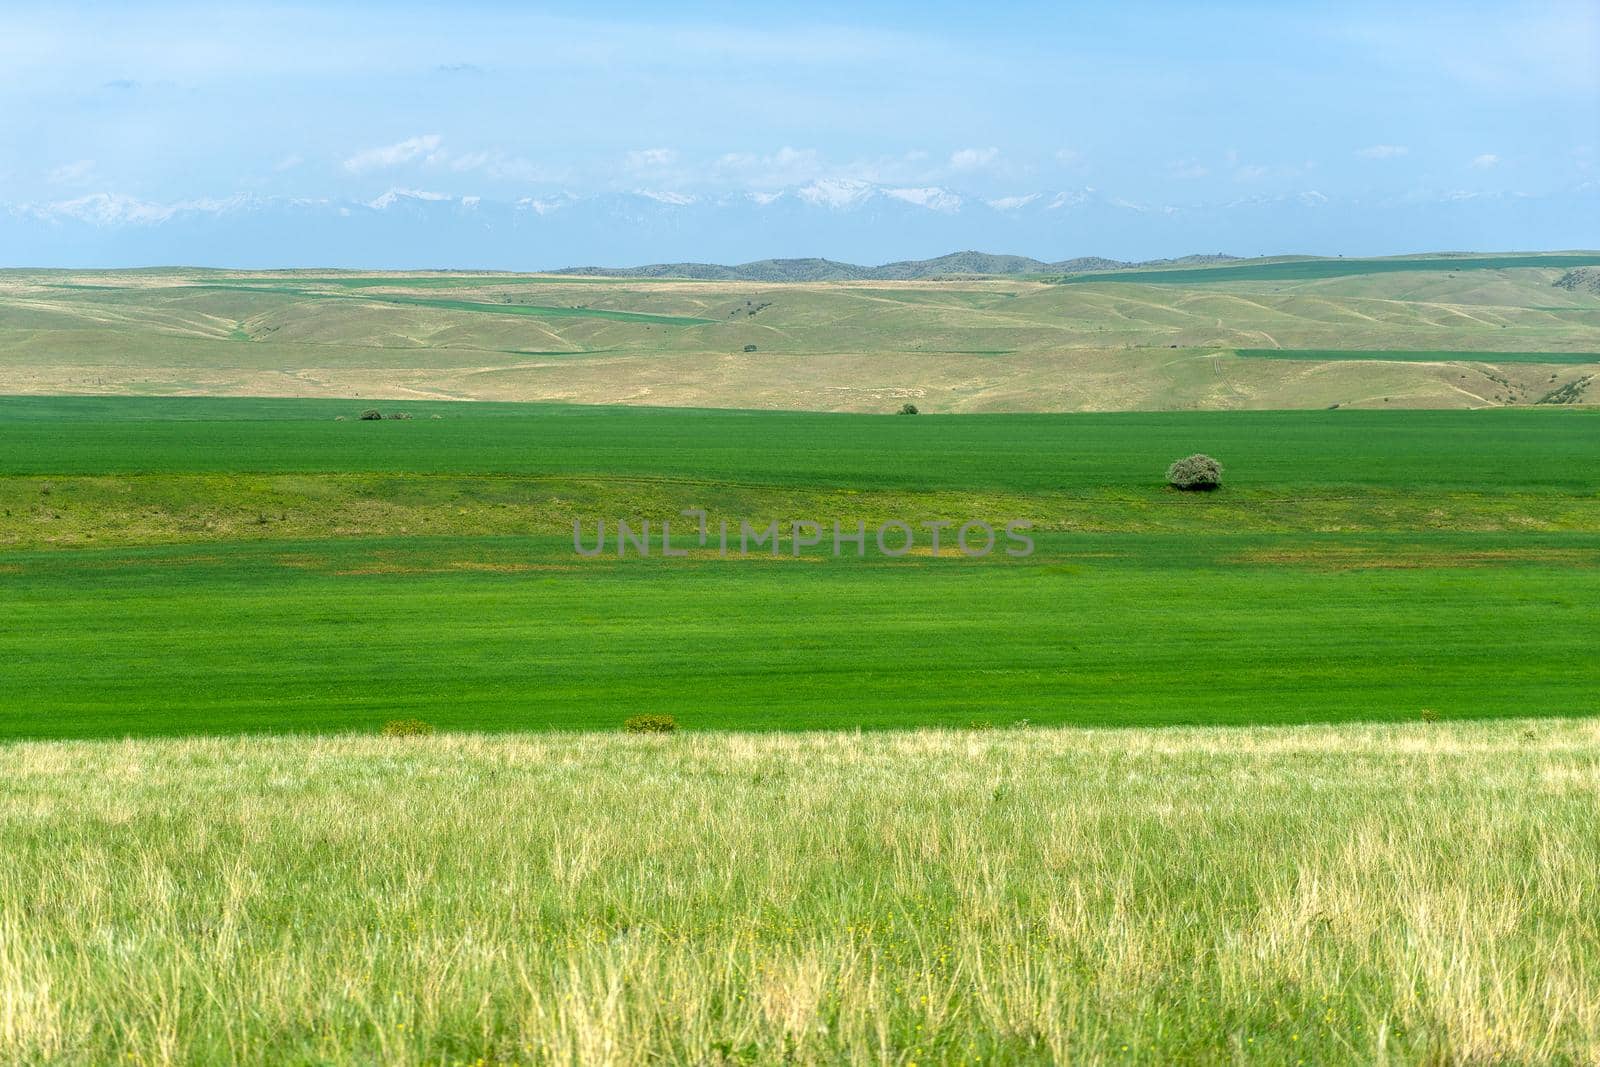 Kahetia, Georgia mountain and fields landscape view by javax